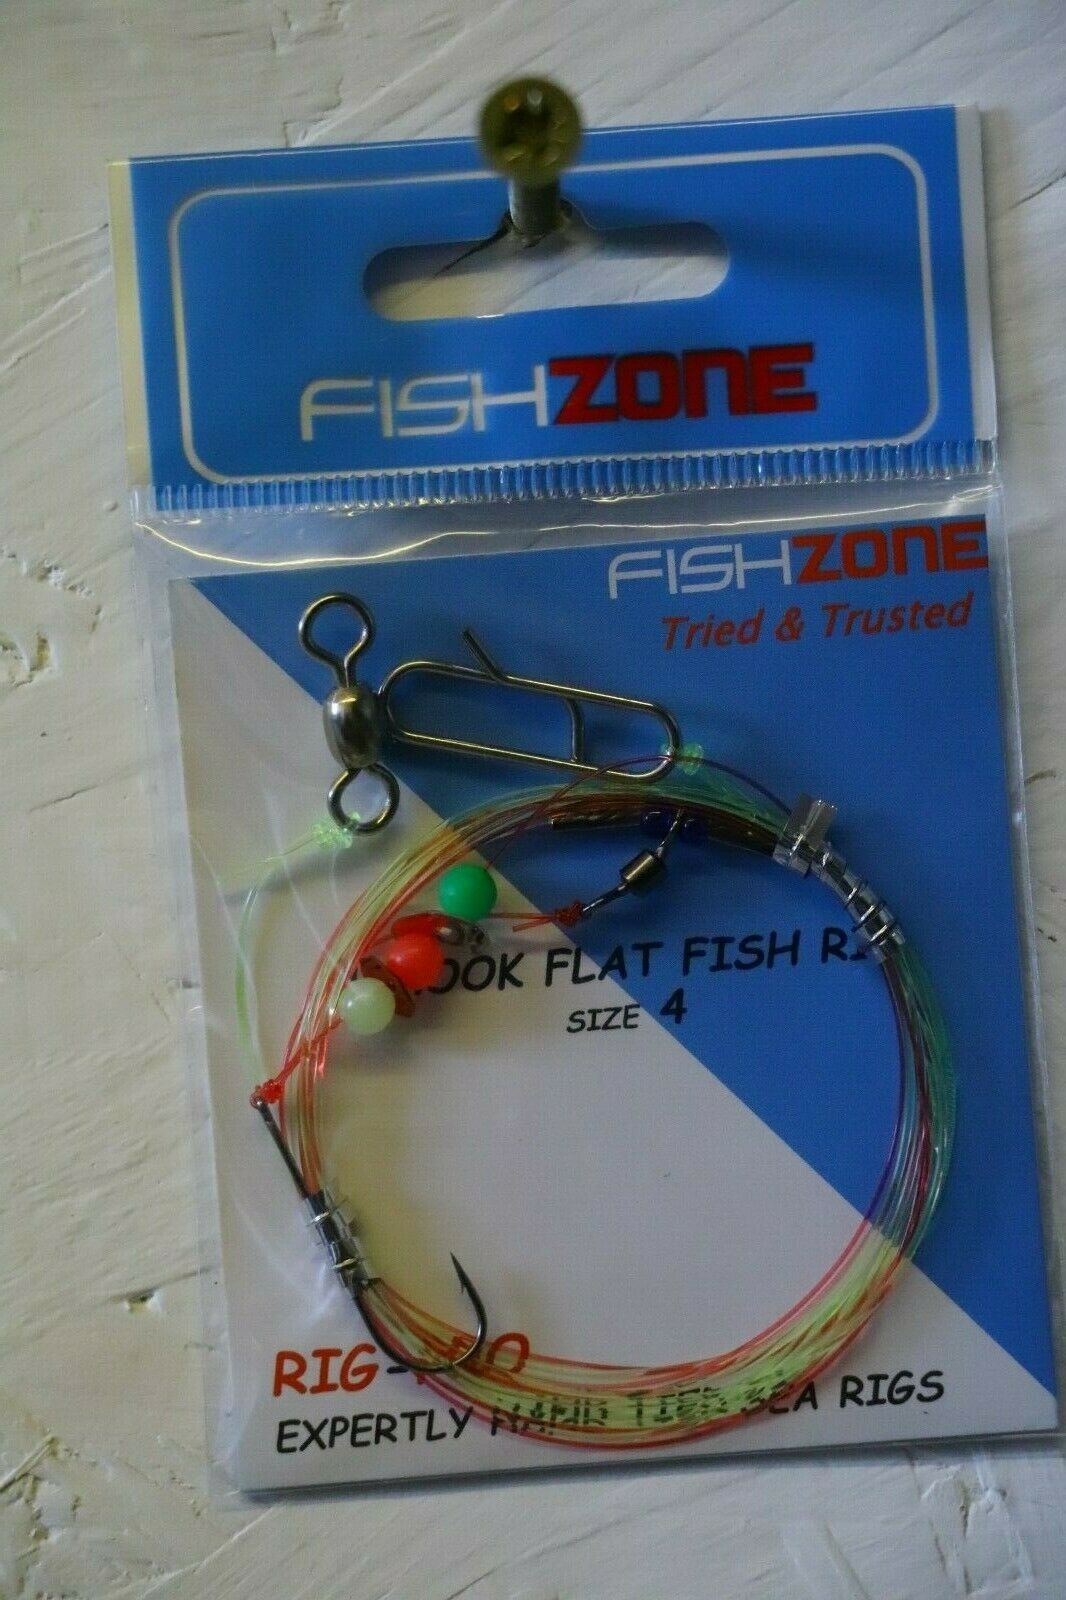 FishZone 1 hook Flat fish Rig size 4